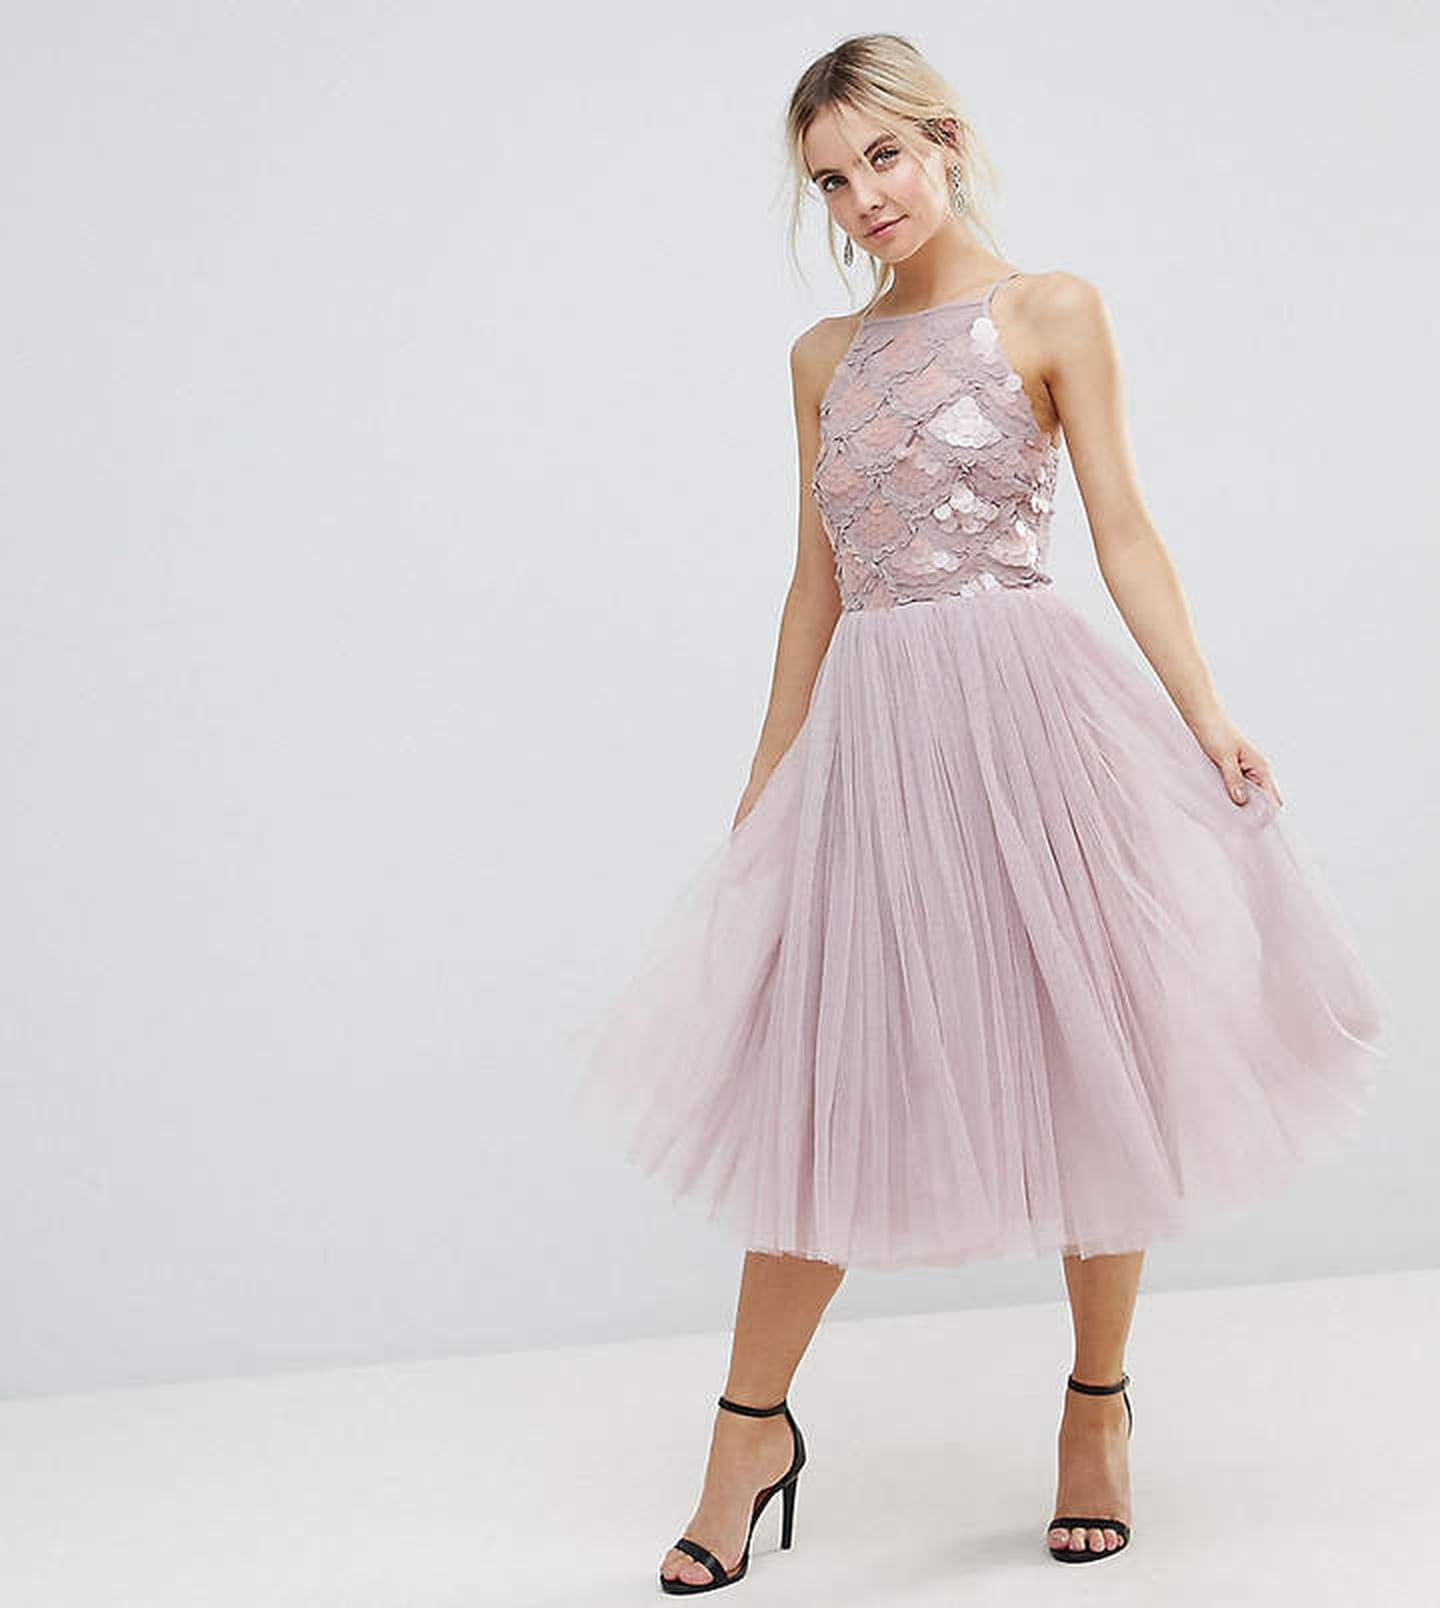 Best Prom Dresses 2018 | POPSUGAR Fashion